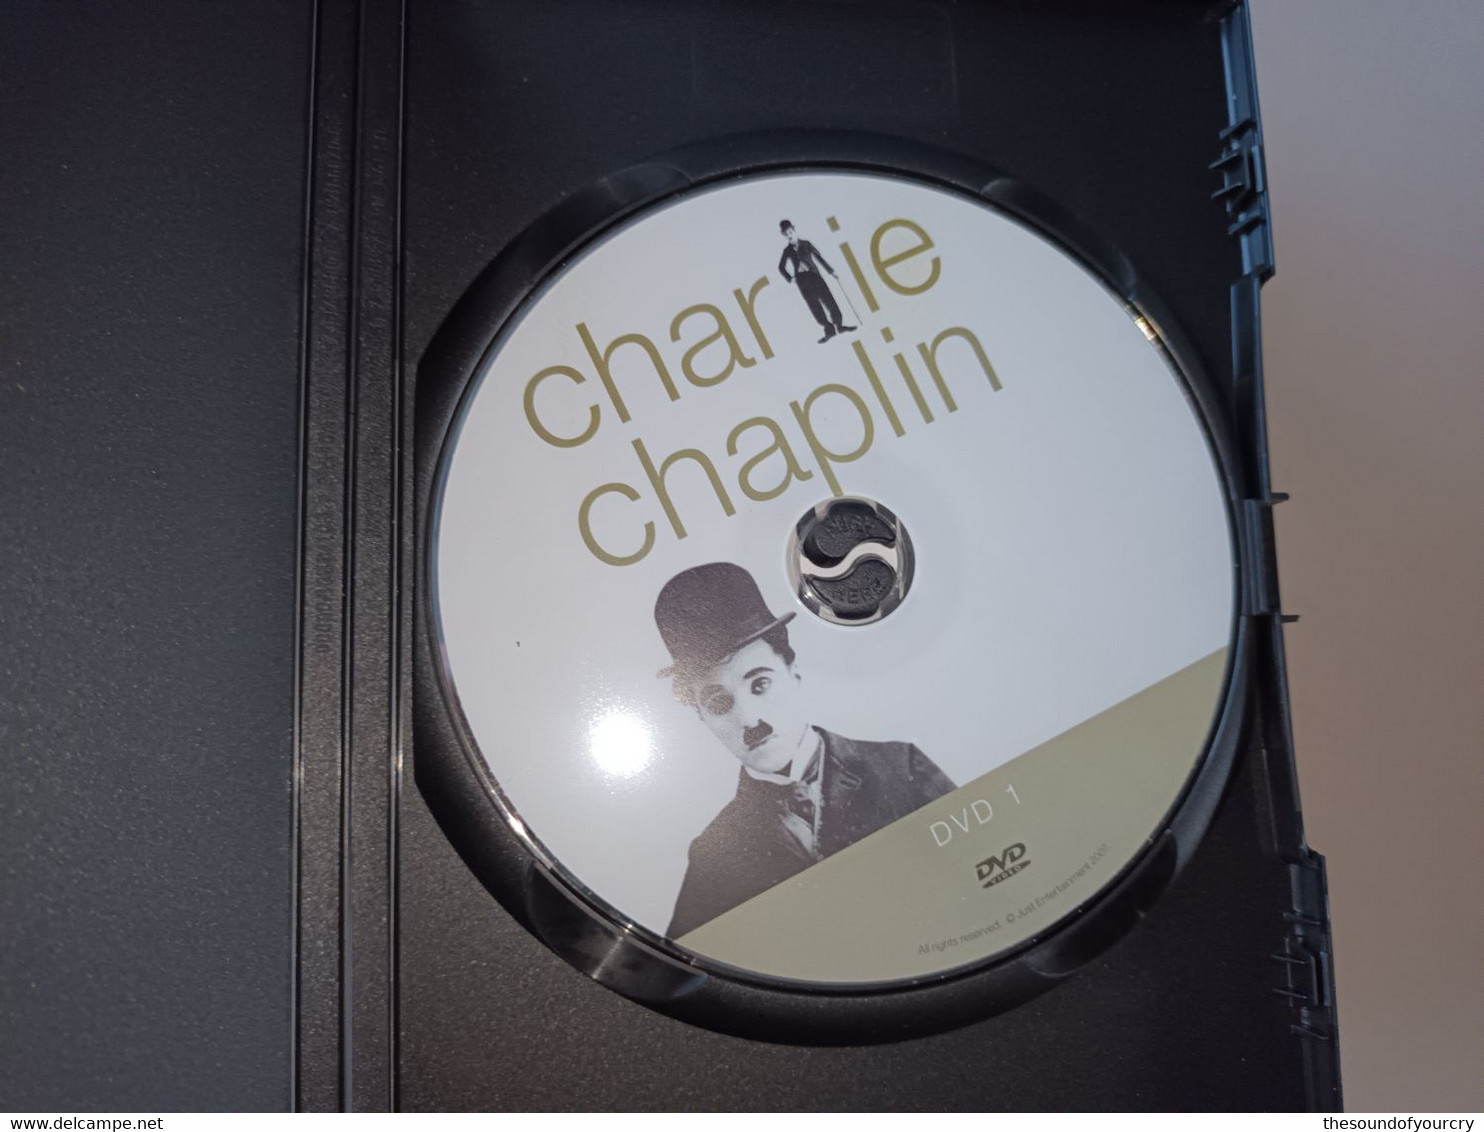 Charlie Chaplin 5 dvd box